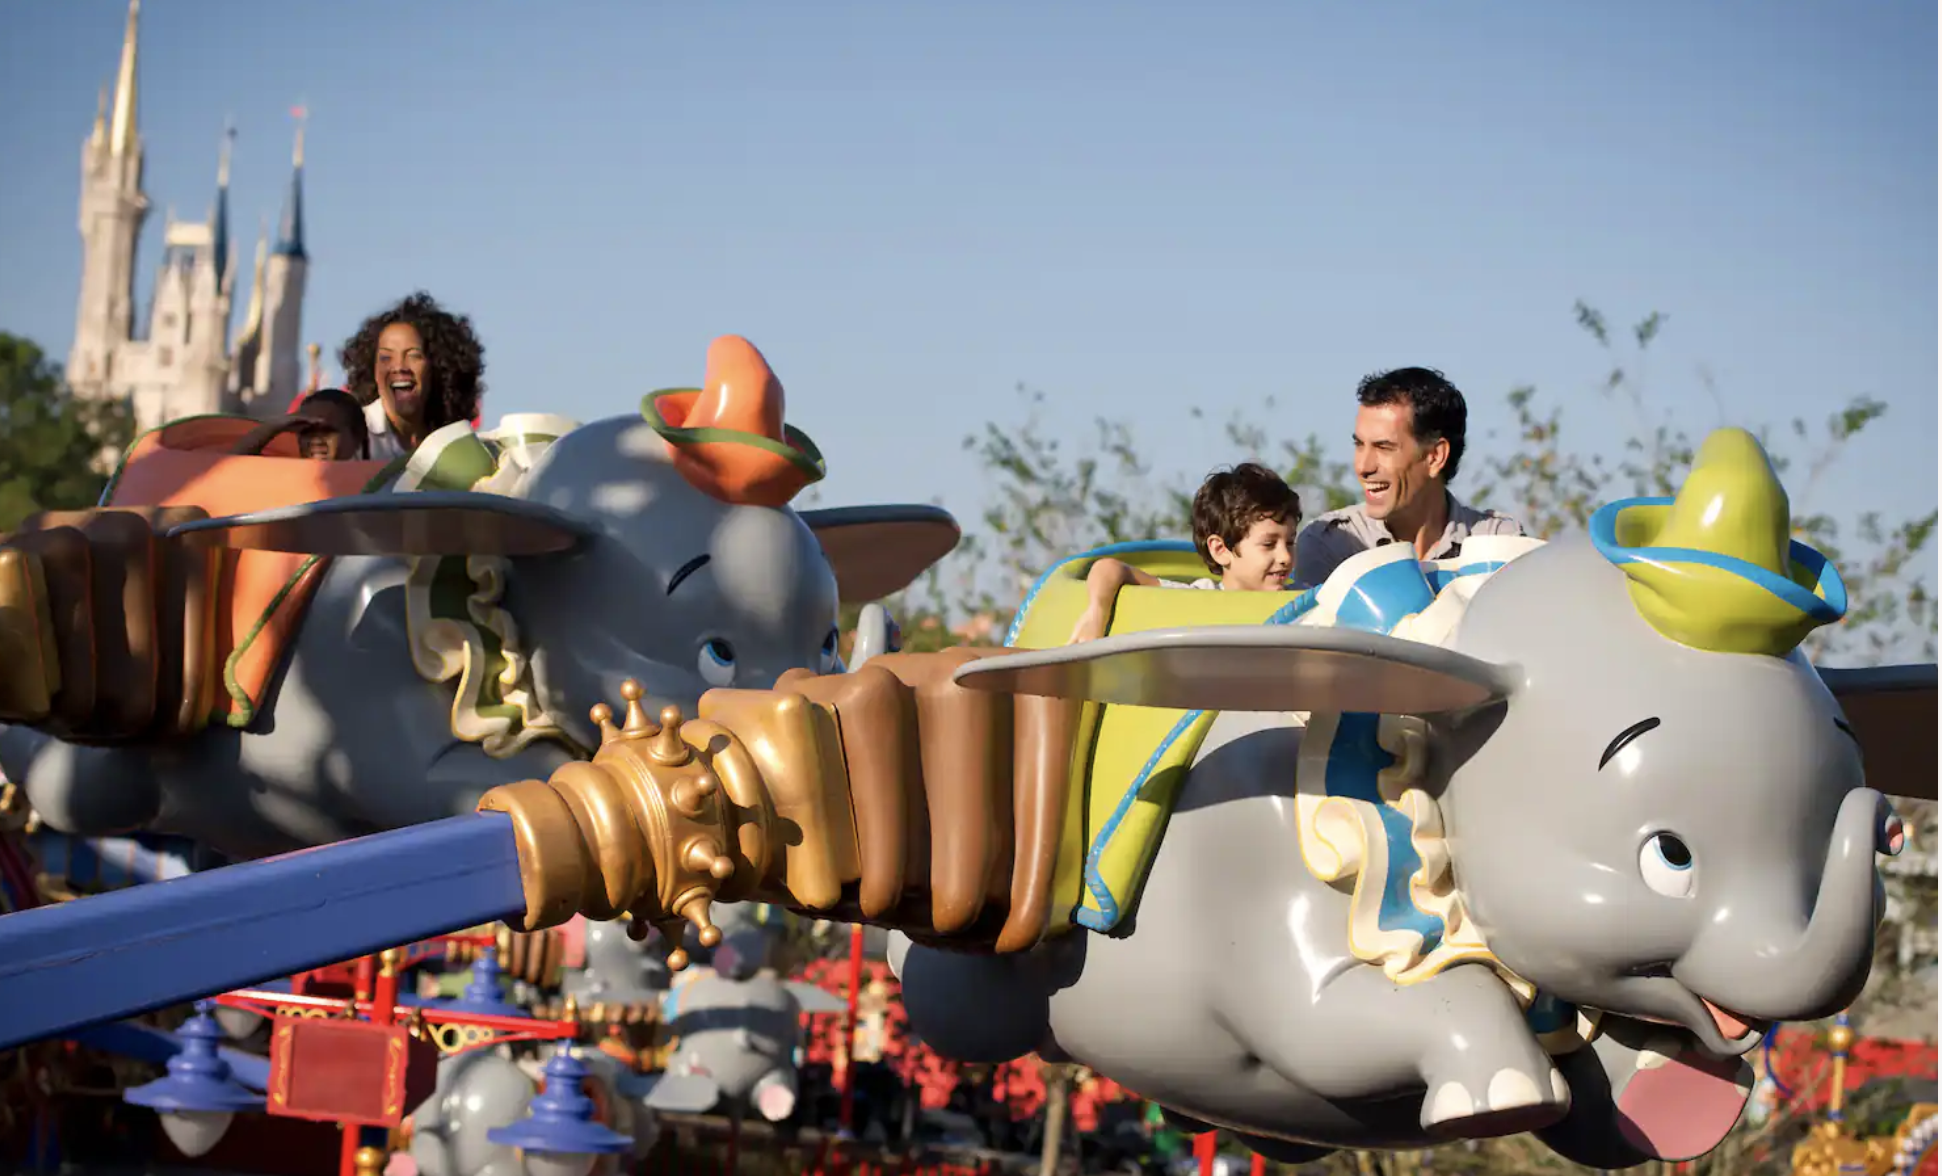 passengers riding dumbo the flying elephant at walt disney world's magic kingdom park